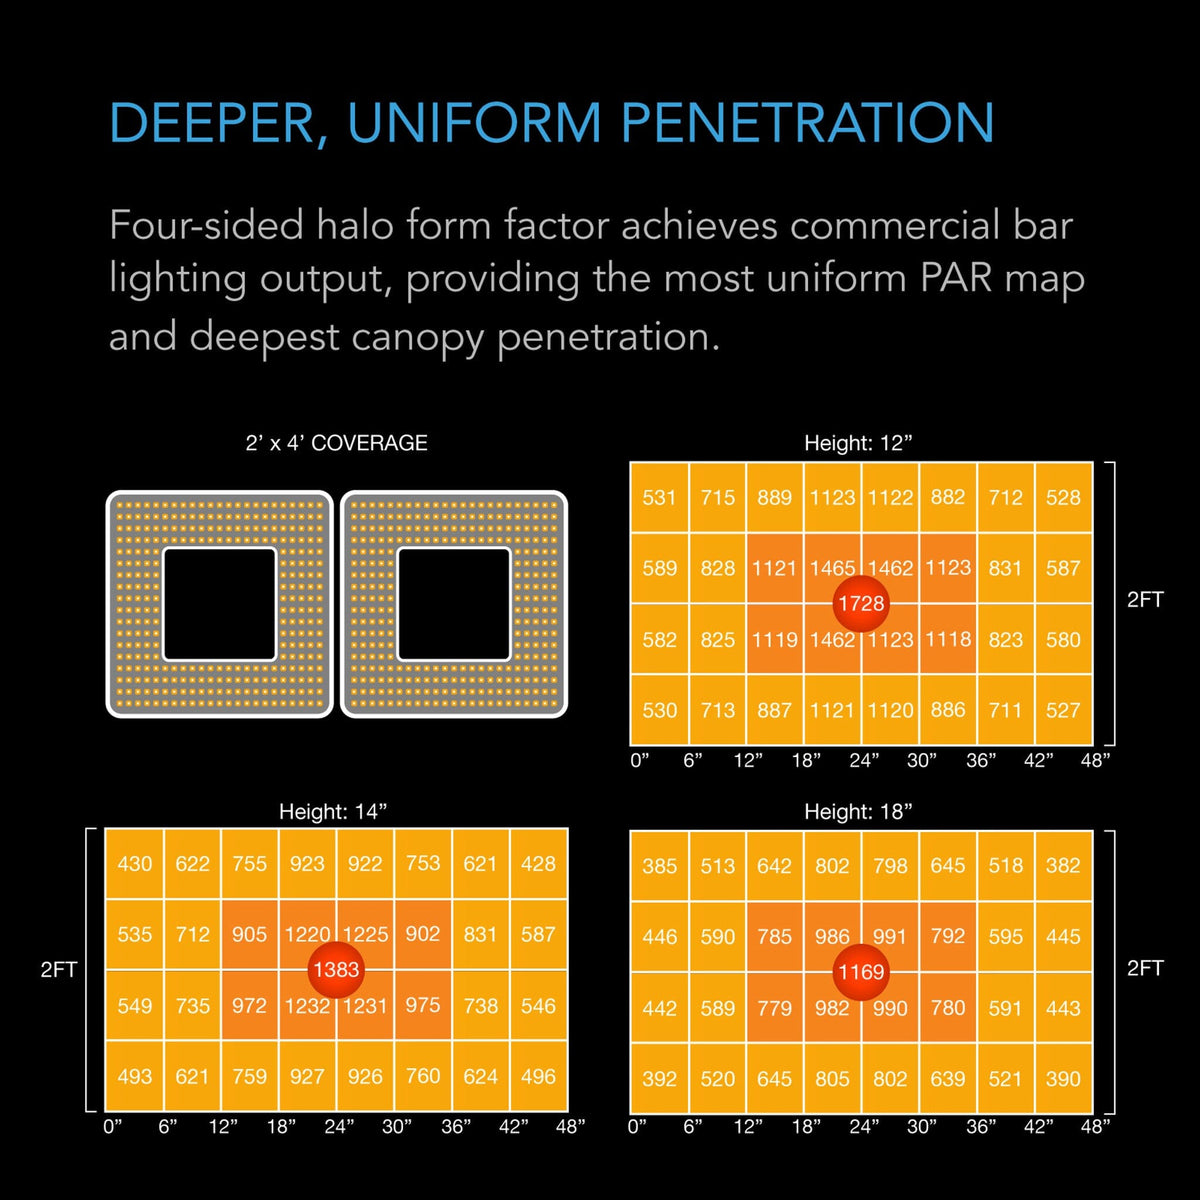 Deeper, Uniform penetration